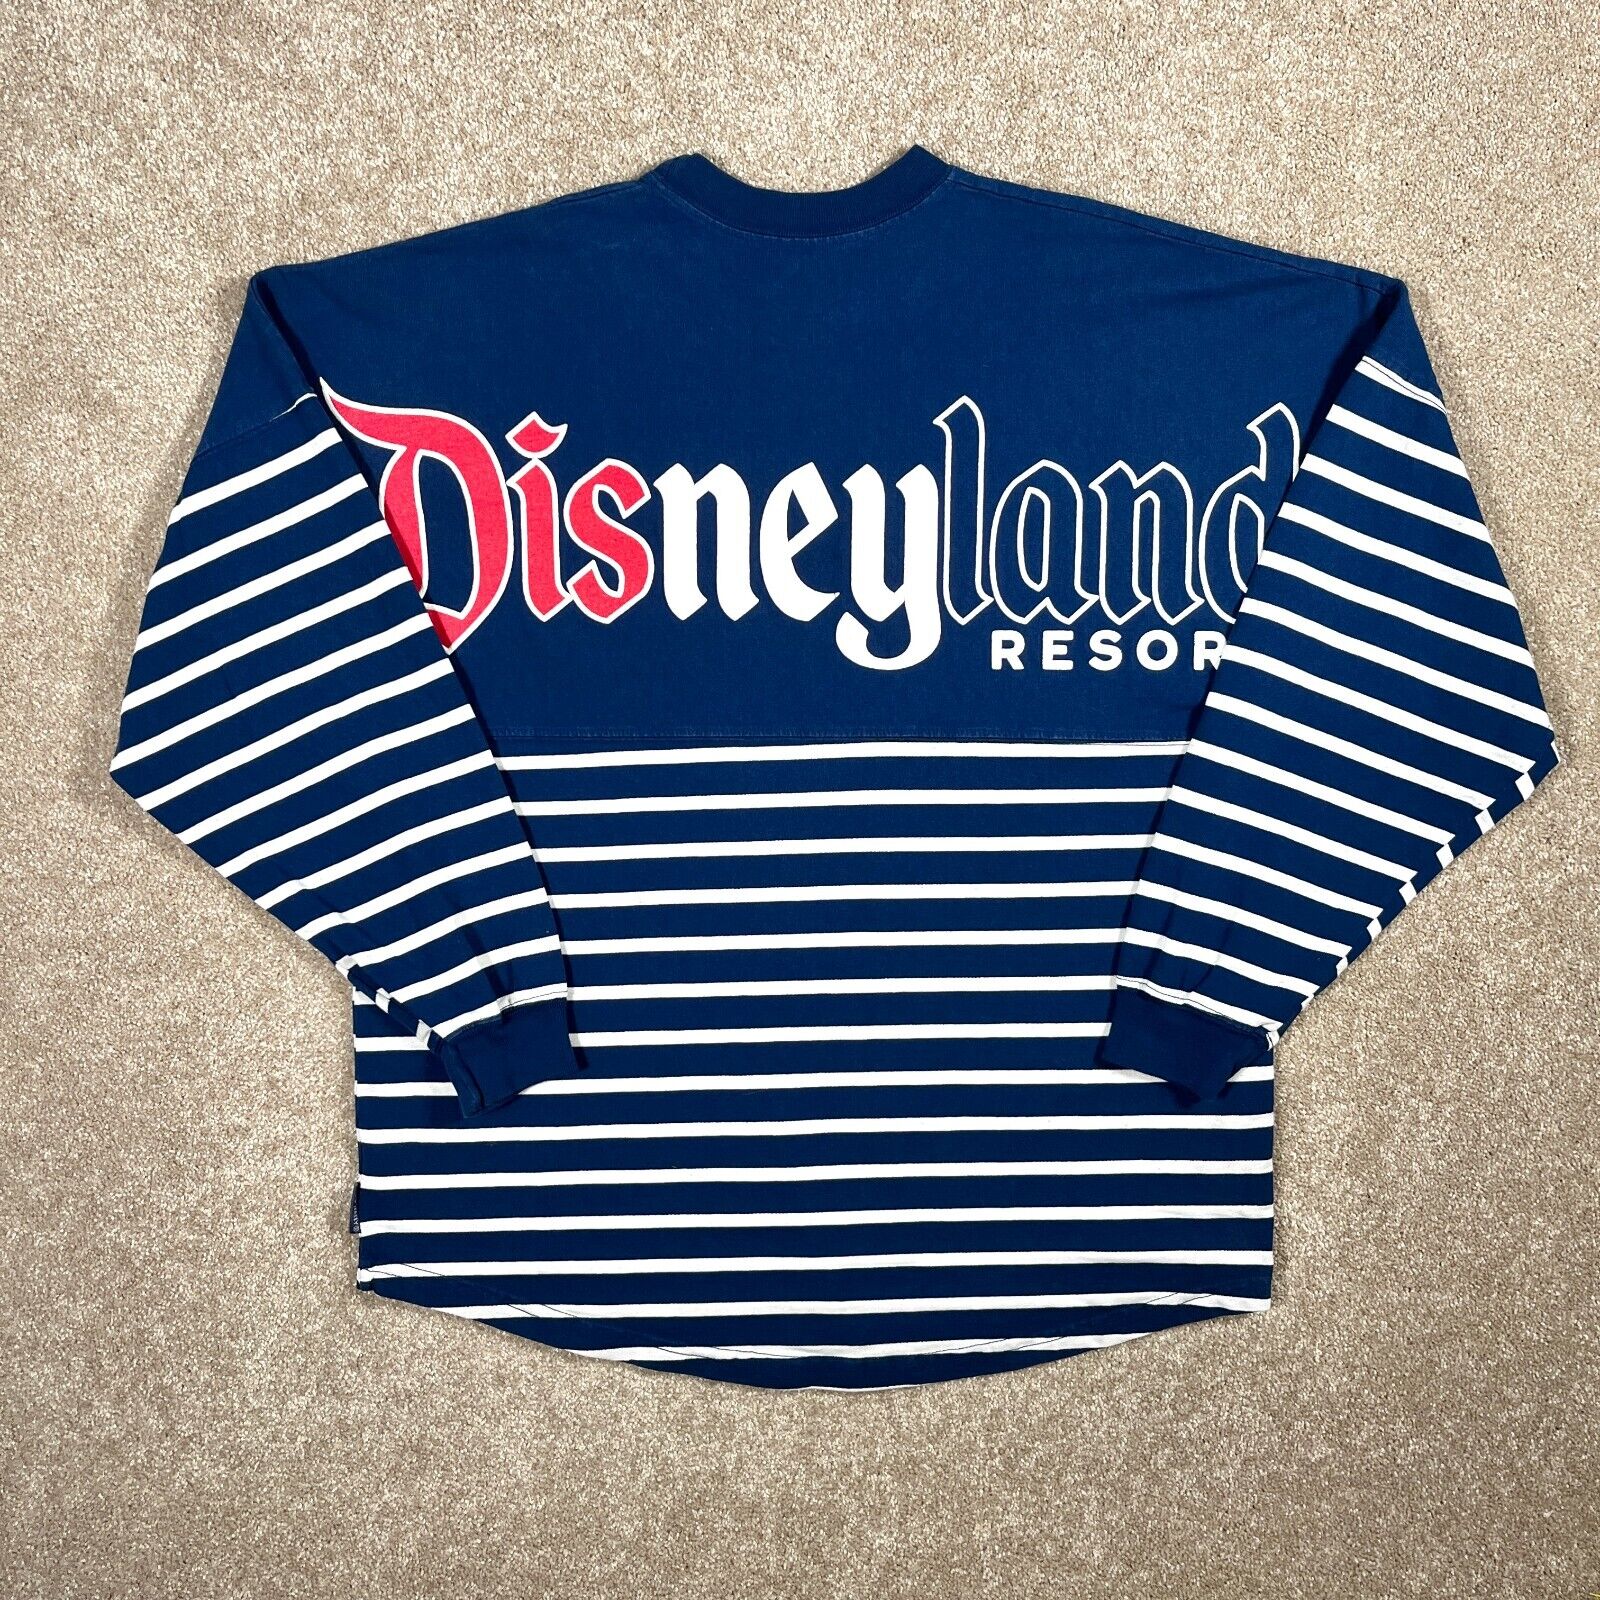 Disneyland Resort Spirit Jersey Adult Size Medium Blue/White Striped Long Sleeve